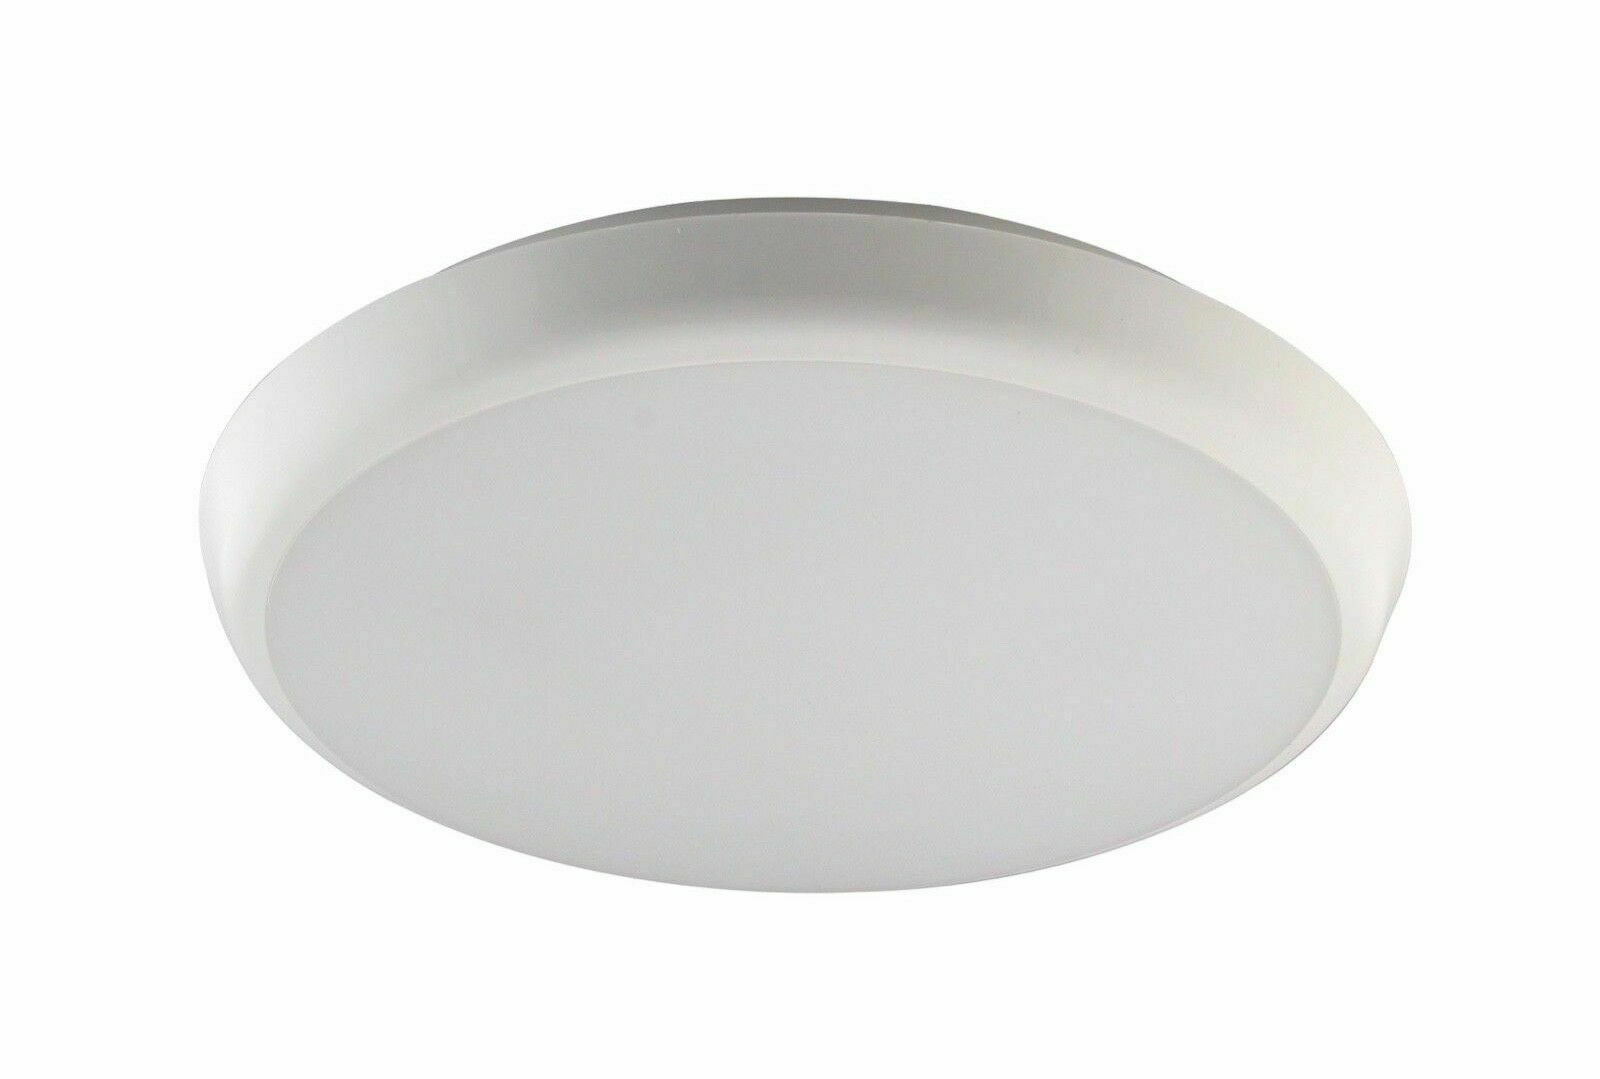 Slim 22W LED Low Ceiling light Slim LED Ceiling or Wall IP65 Bulkhead Light UKEW